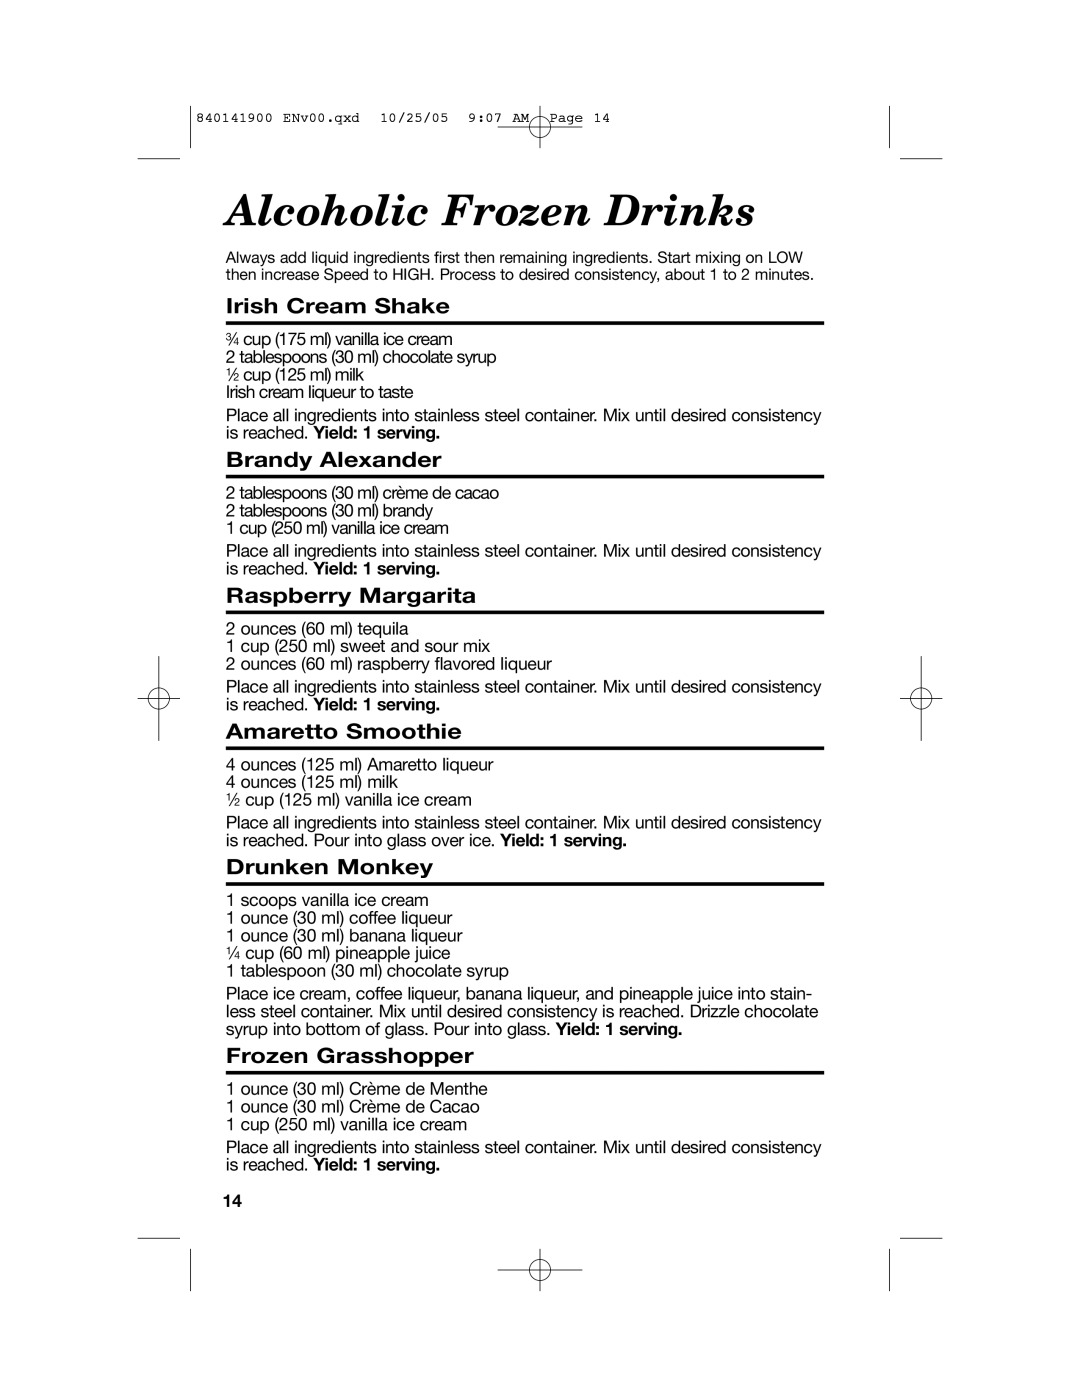 Hamilton Beach 840141900 Alcoholic Frozen Drinks, Irish Cream Shake, Brandy Alexander, Raspberry Margarita, Drunken Monkey 